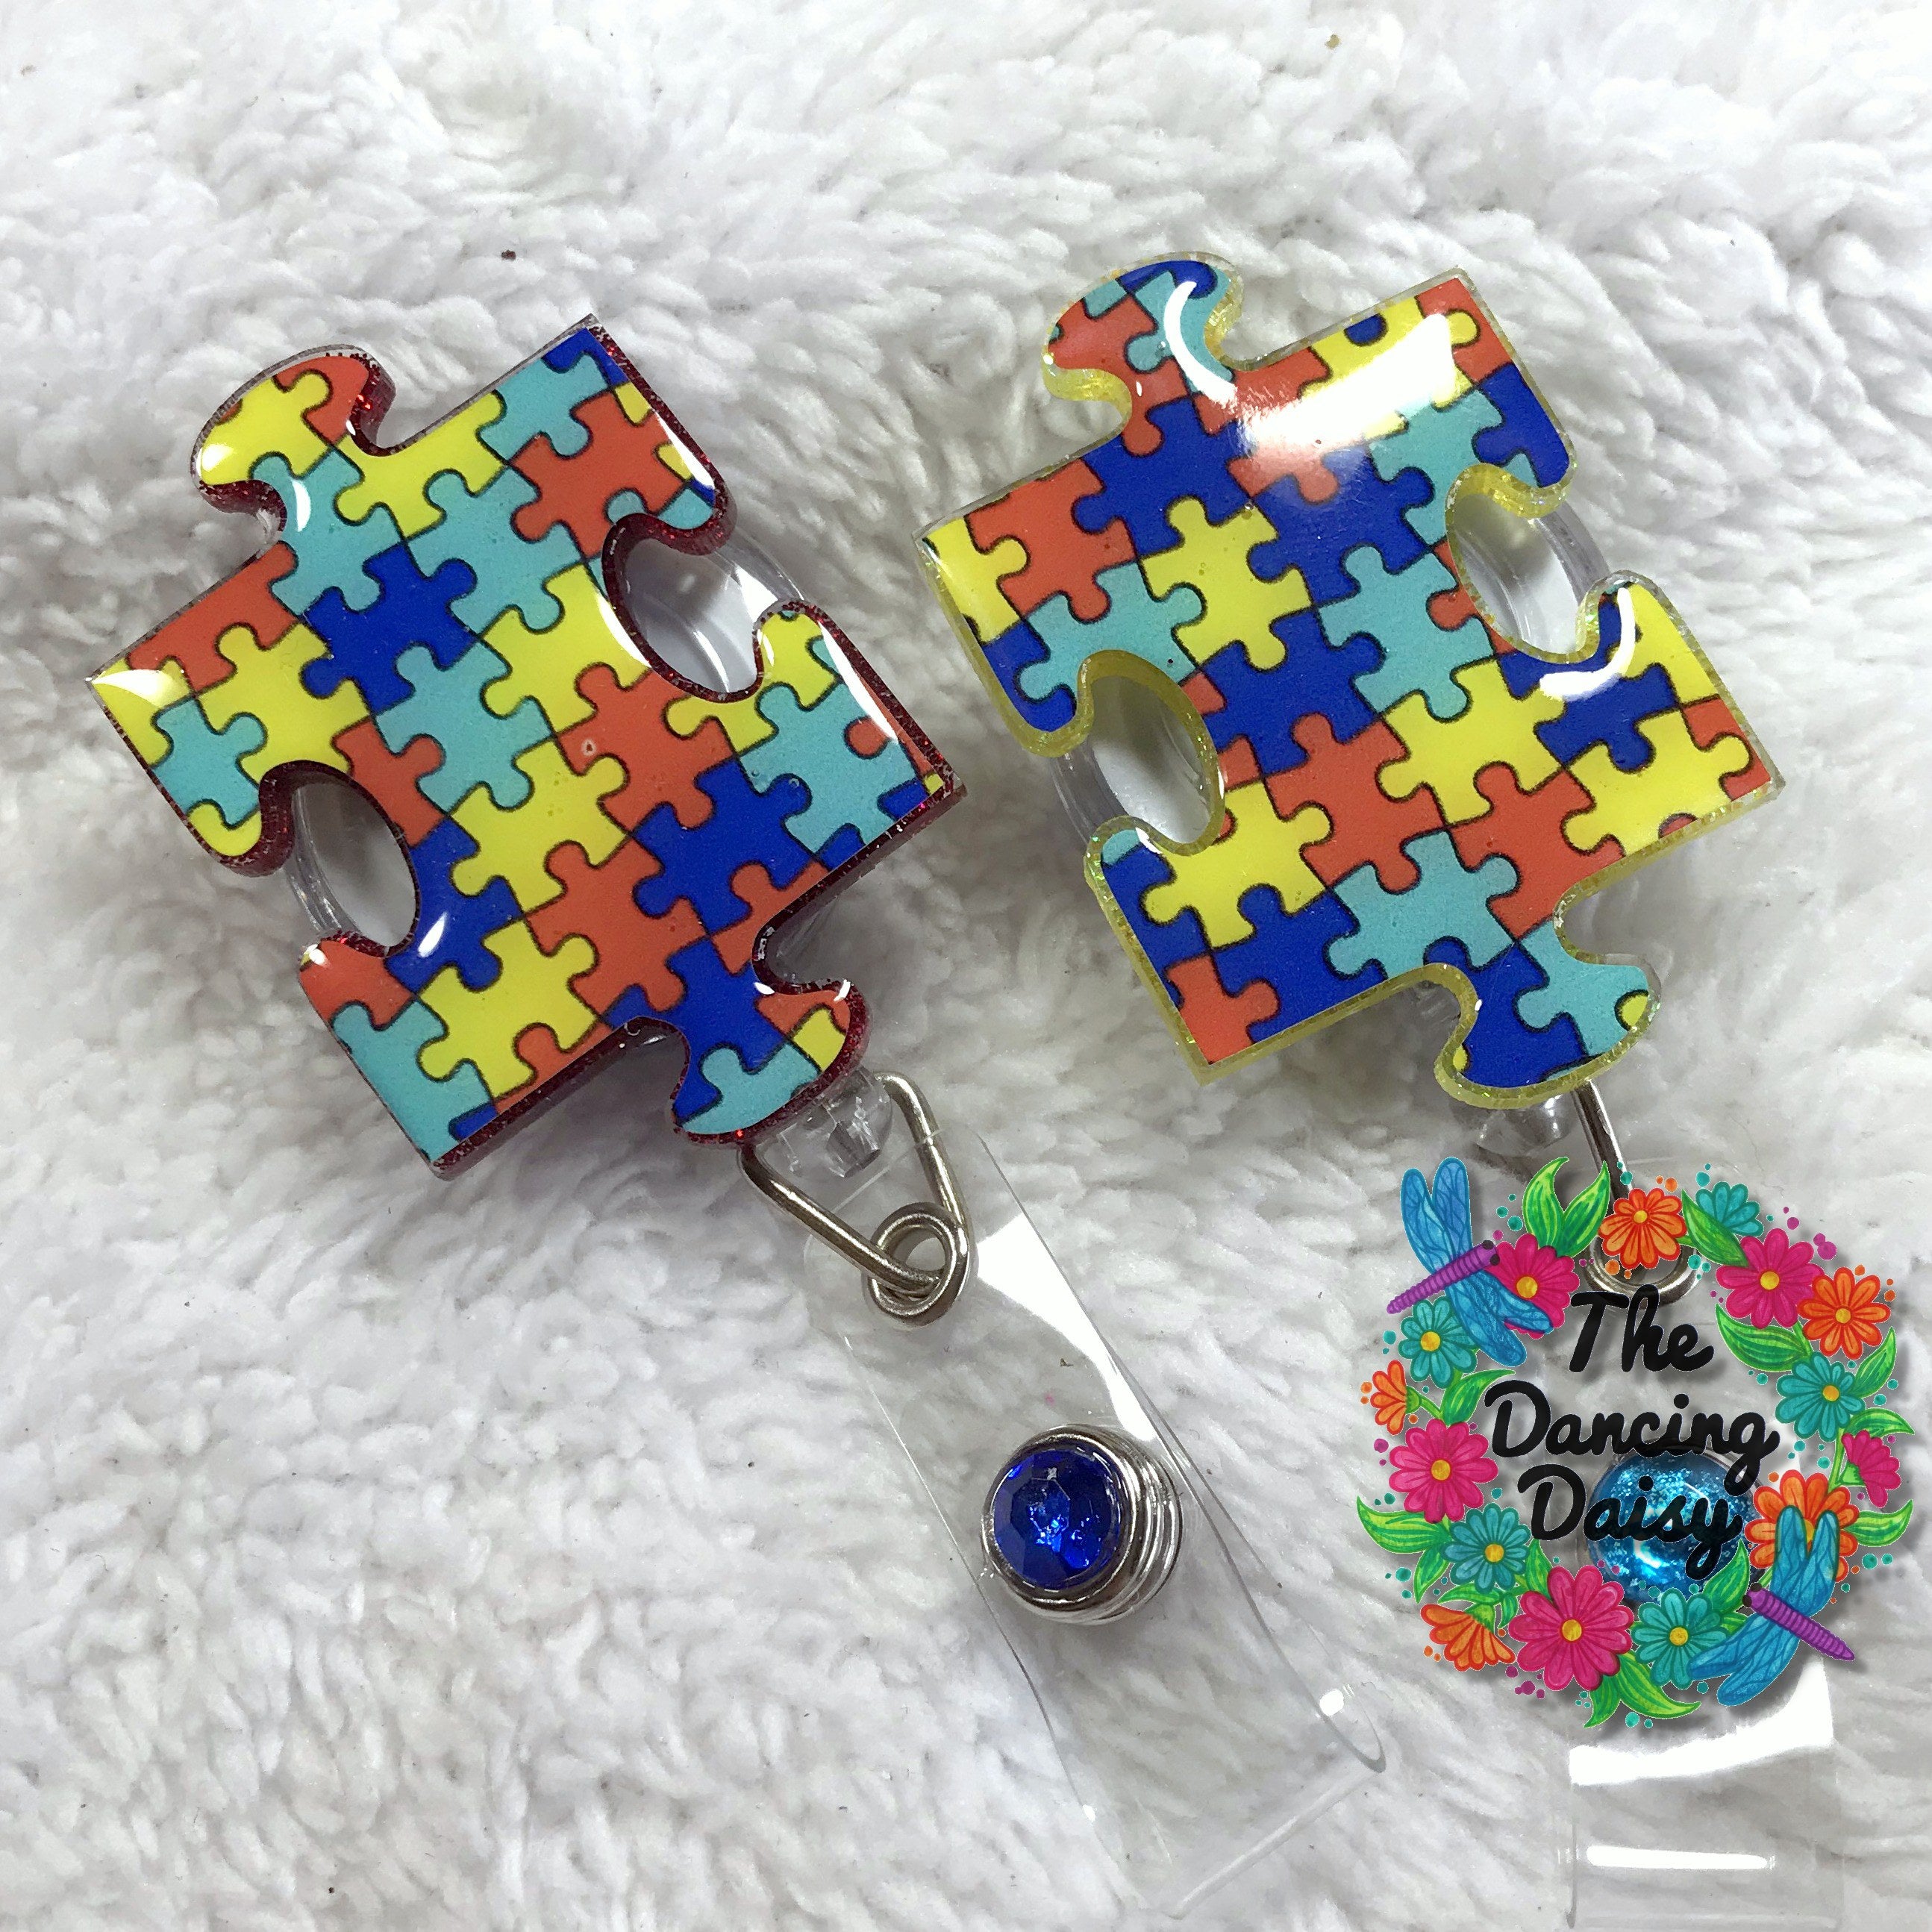 Autism Puzzle Piece Acrylic Block - 5.25 inch